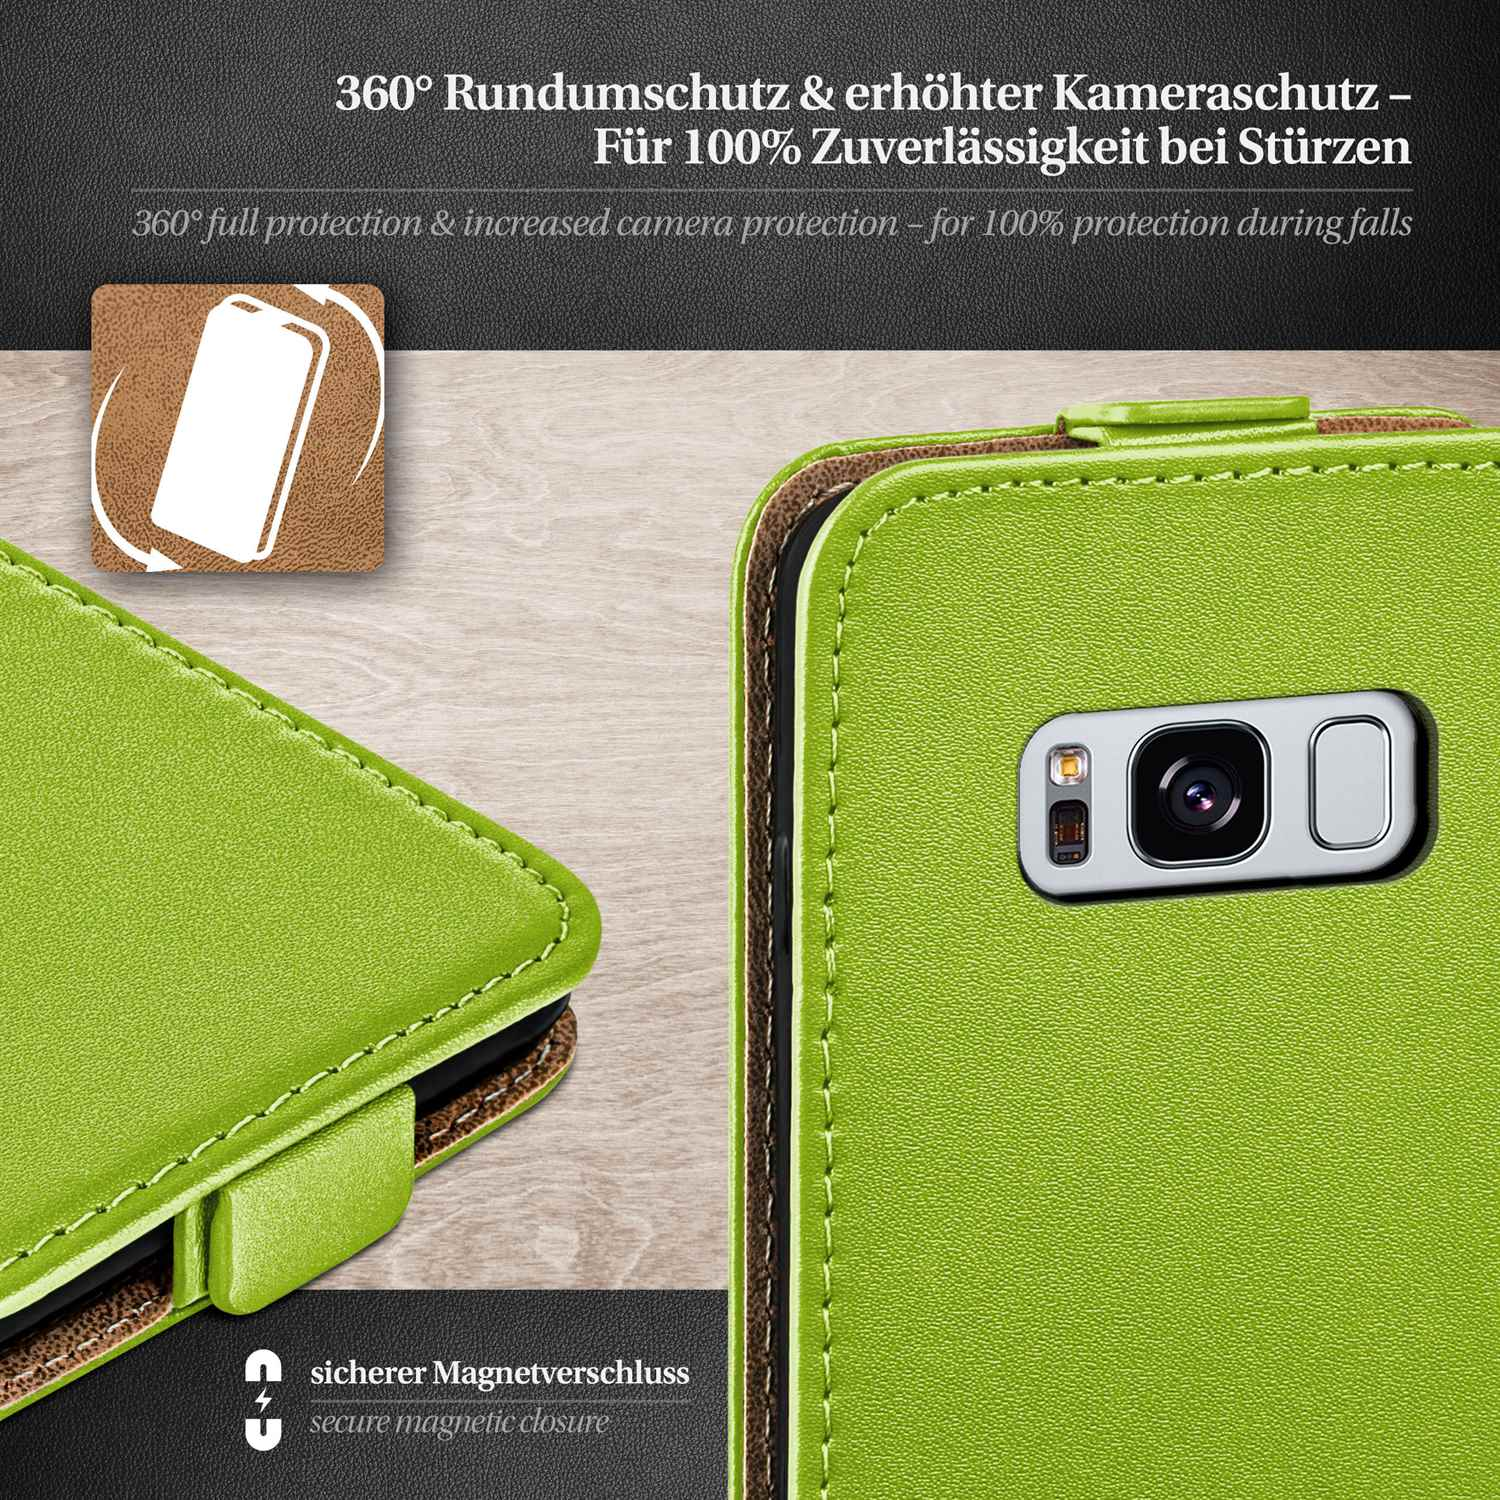 Case, Flip Cover, Galaxy MOEX Lime-Green Flip Samsung, S8,